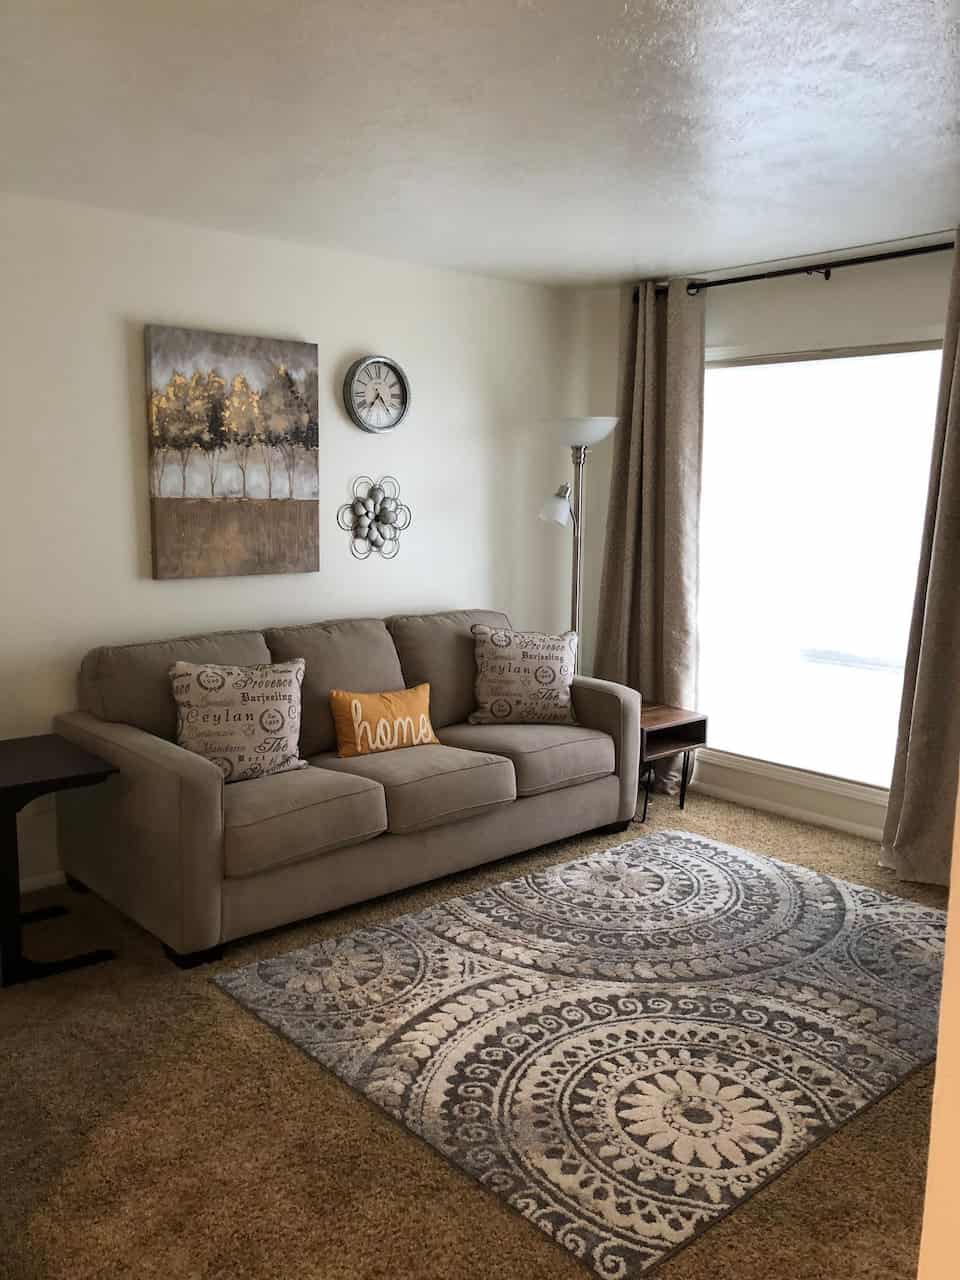 Image of Airbnb rental in Idaho Falls, Idaho